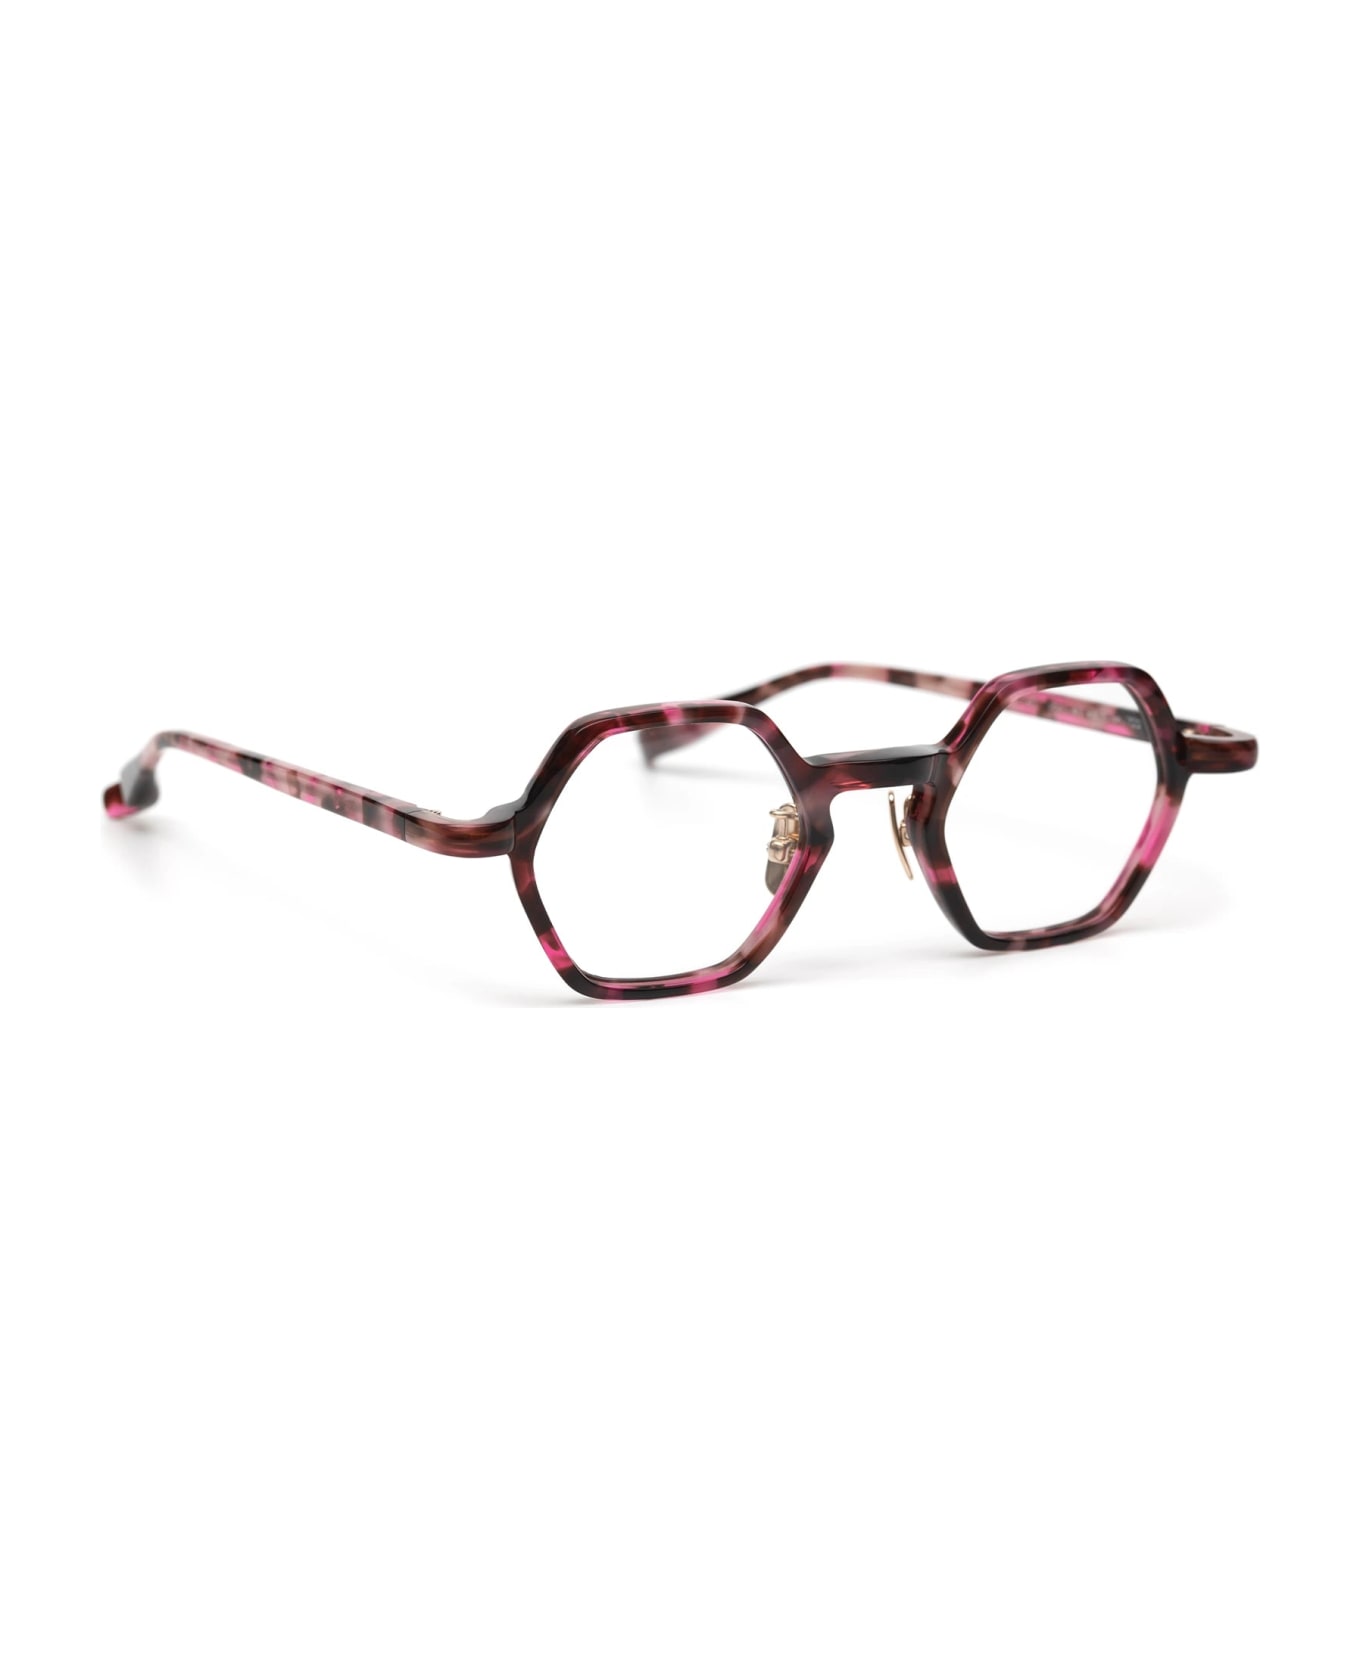 FACTORY900 Yu - Pink Tortoise Glasses - pink tortoise